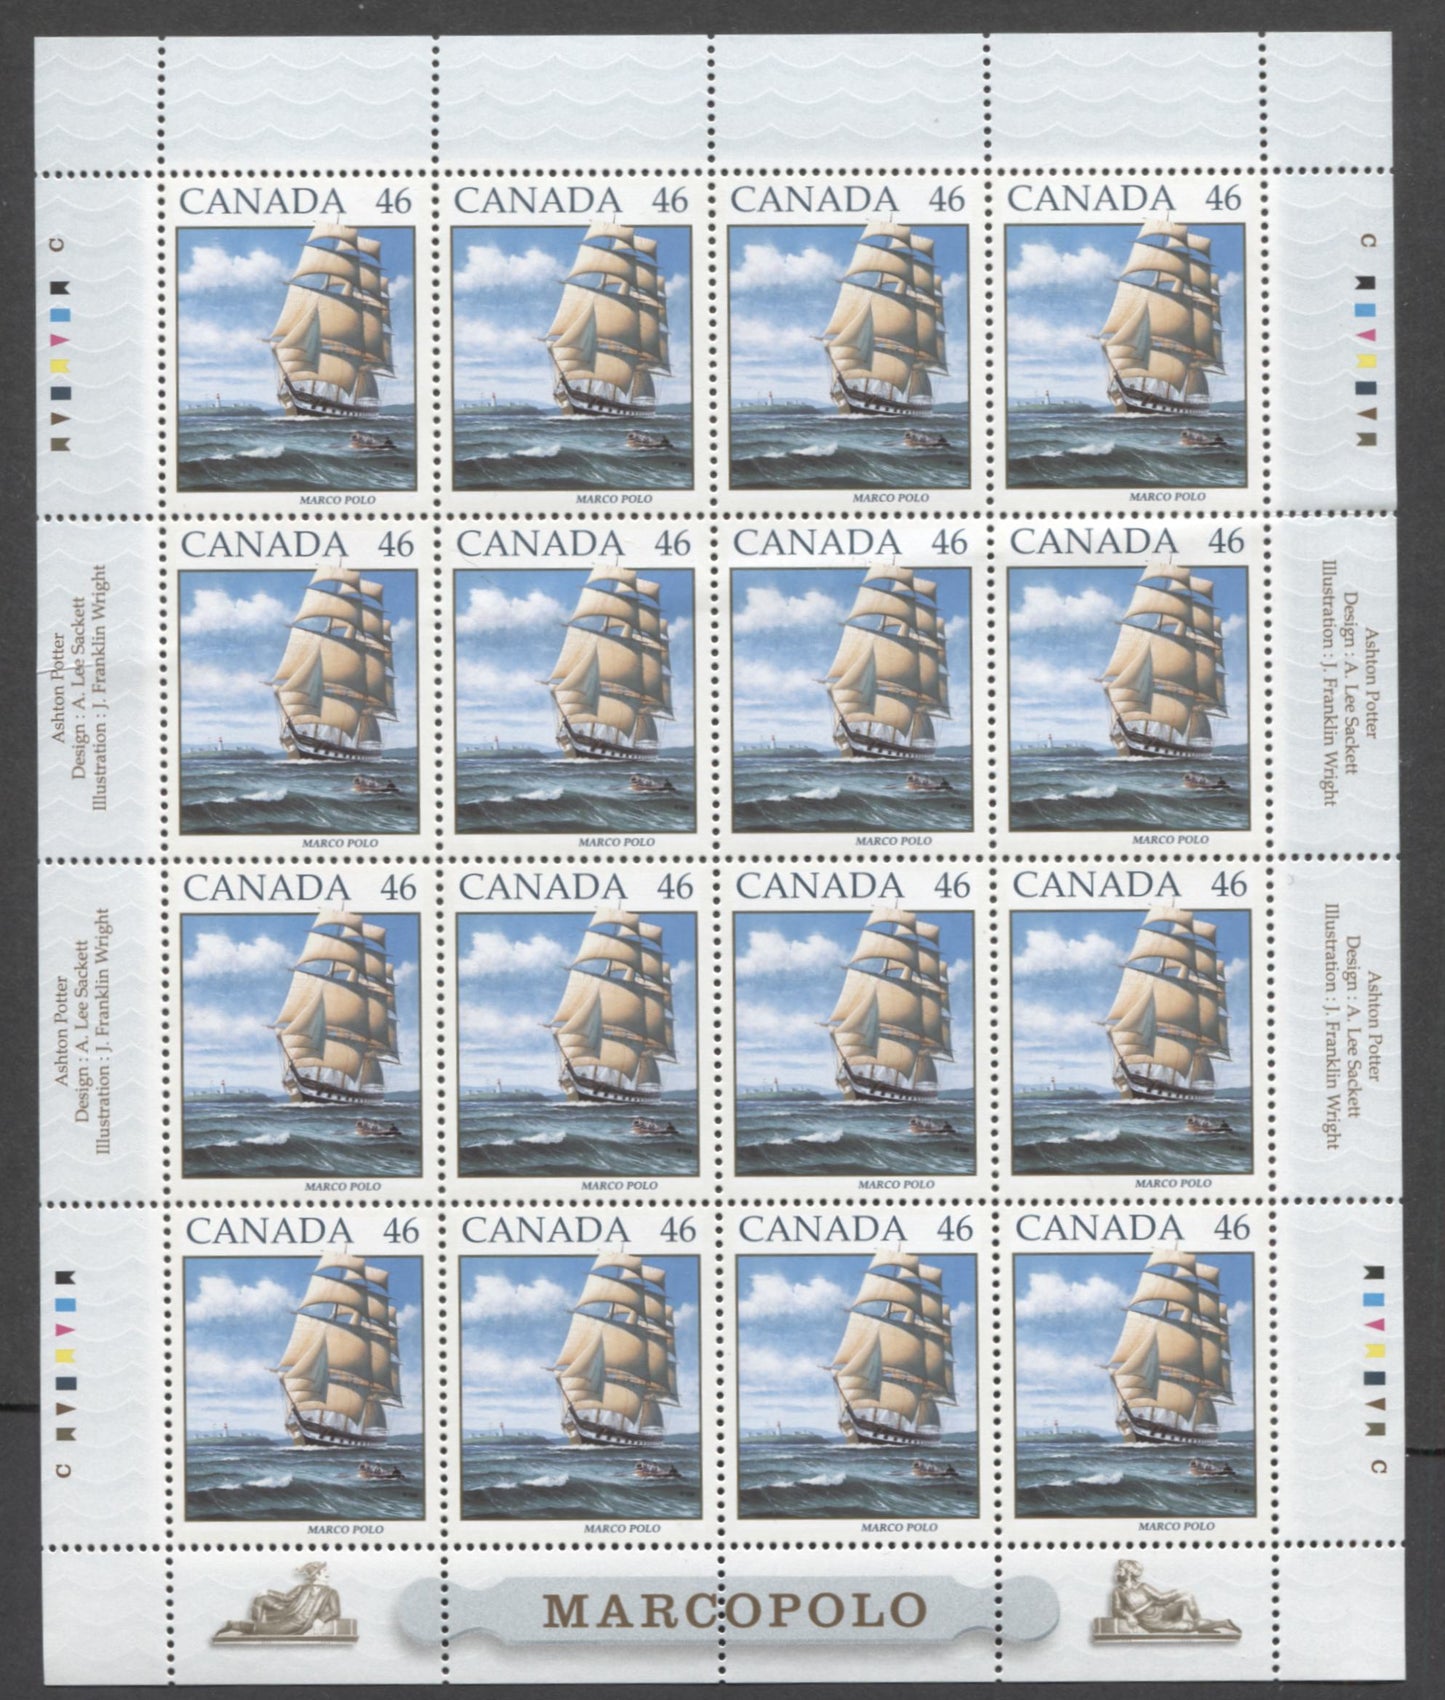 Lot 398 Canada #1779 46c Multicolored Marco Polo, 1999 Sailing Ship Marco Polo, Pane Of 16, TRC Paper, APC, VFNH 84, Unfolded,  Unitrade Cat. As Singles $16